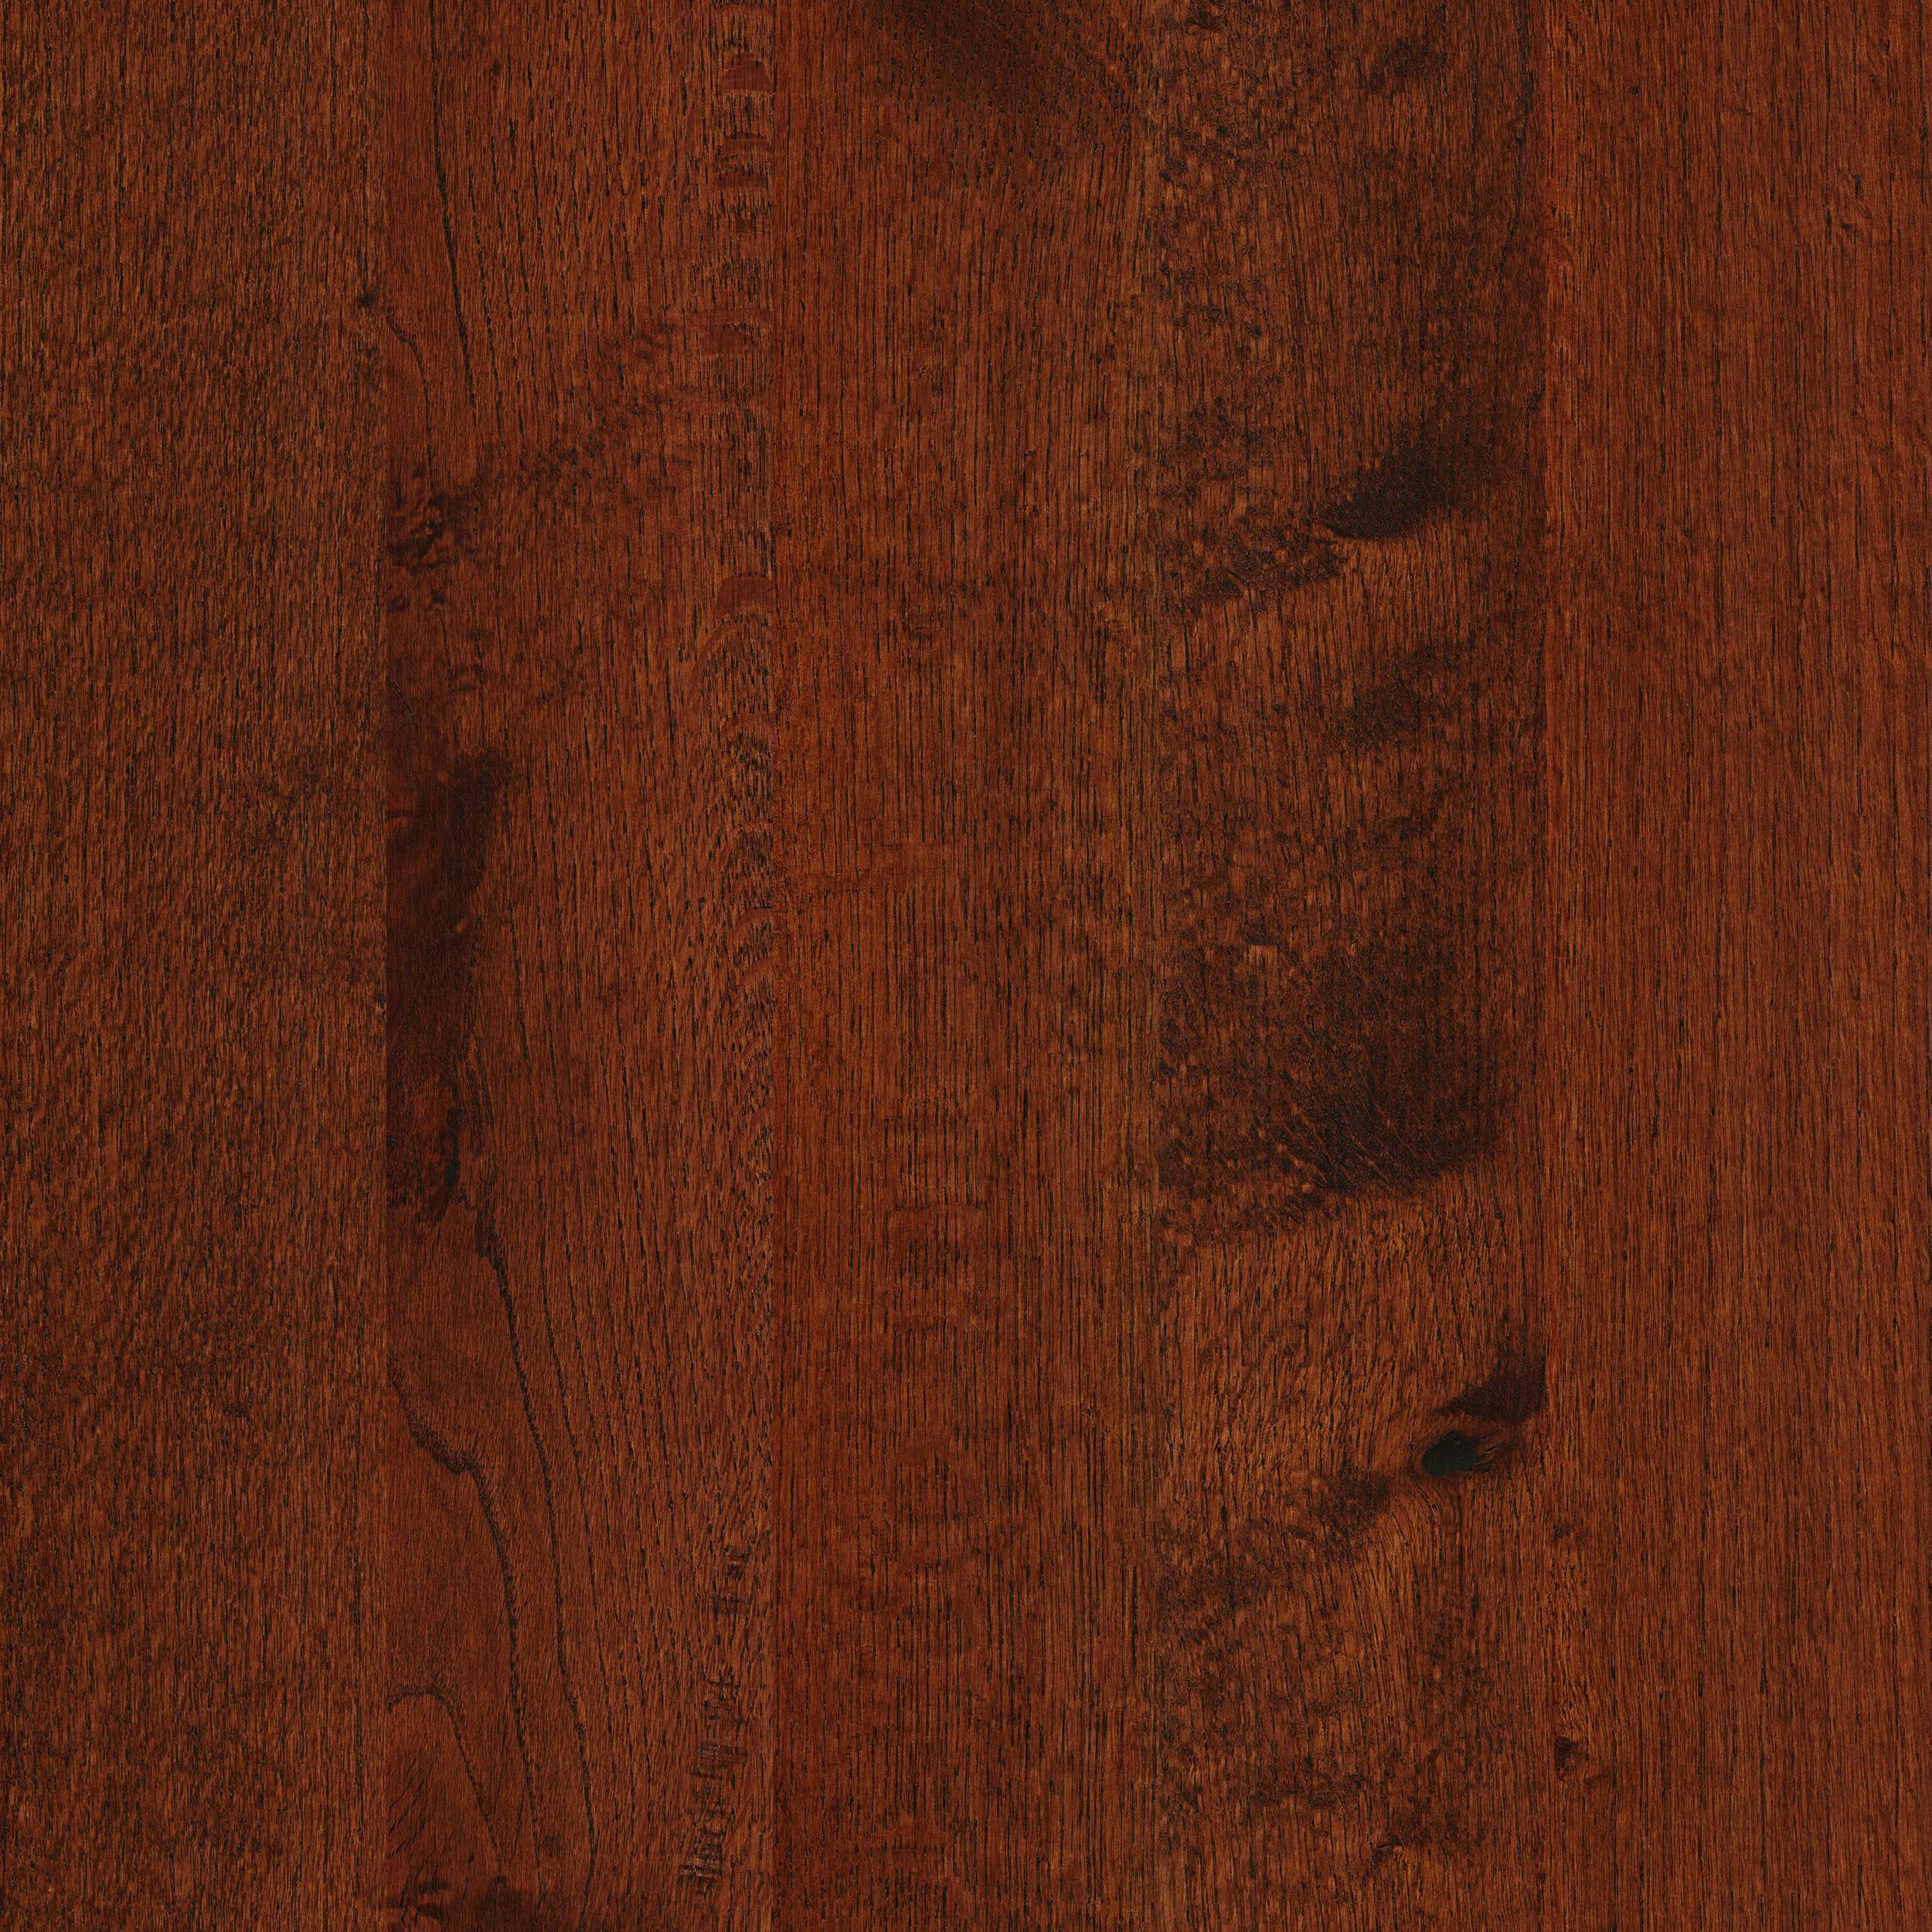 mohawk hardwood flooring prices of timber hardwood red oak sorrell 5 wide solid hardwood flooring for red oak sorrell timber solid approved bk